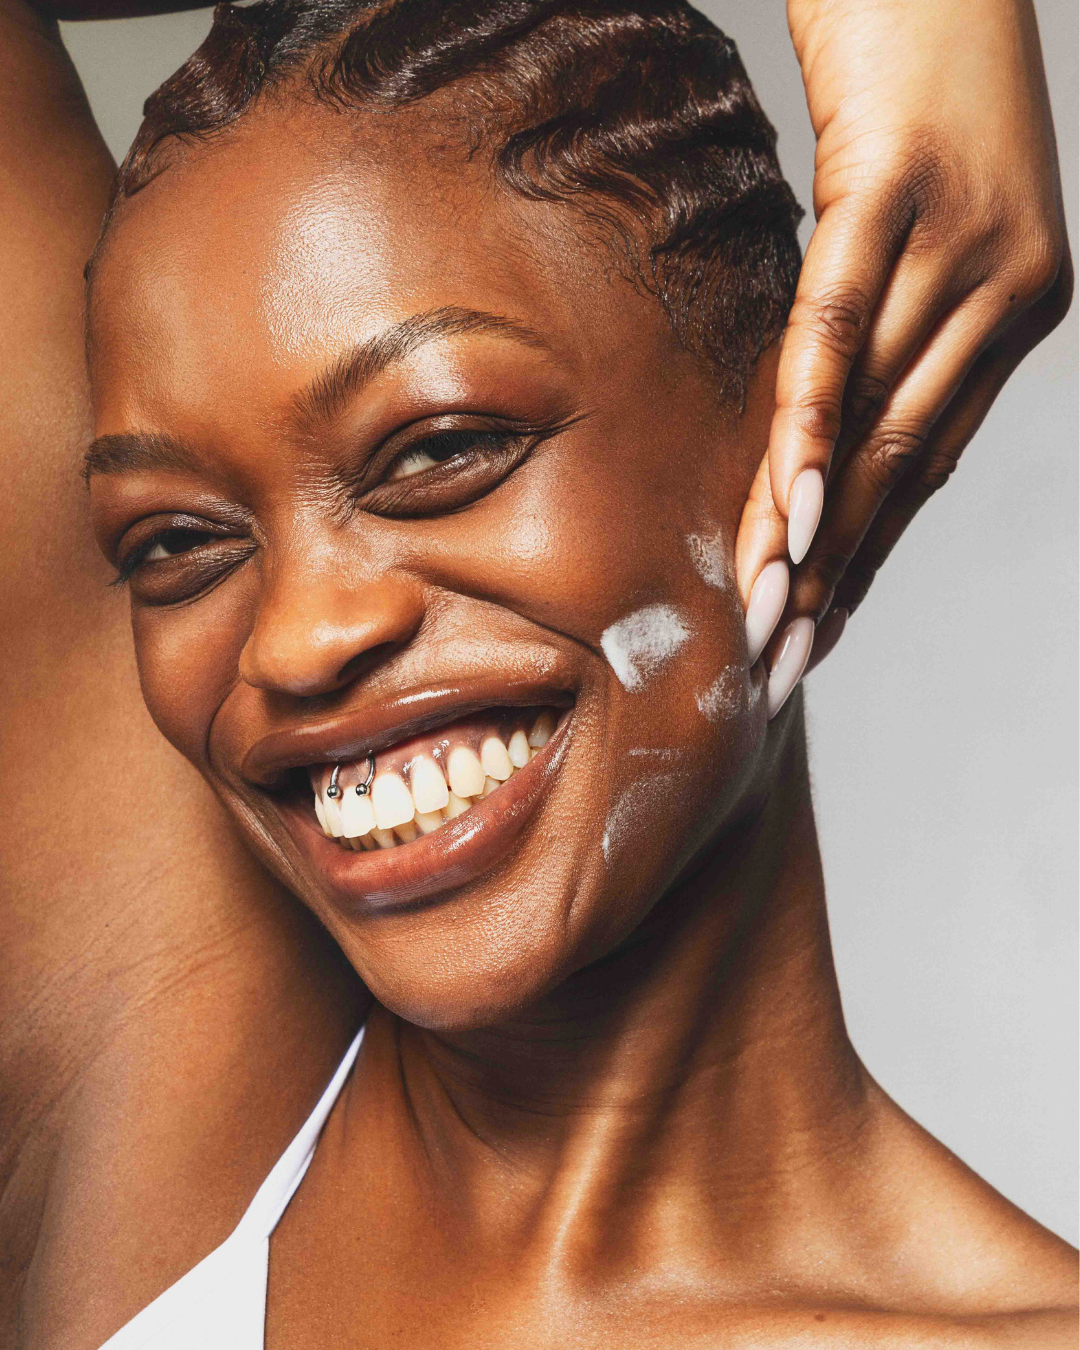 Model smiling rubbing cream into her face.